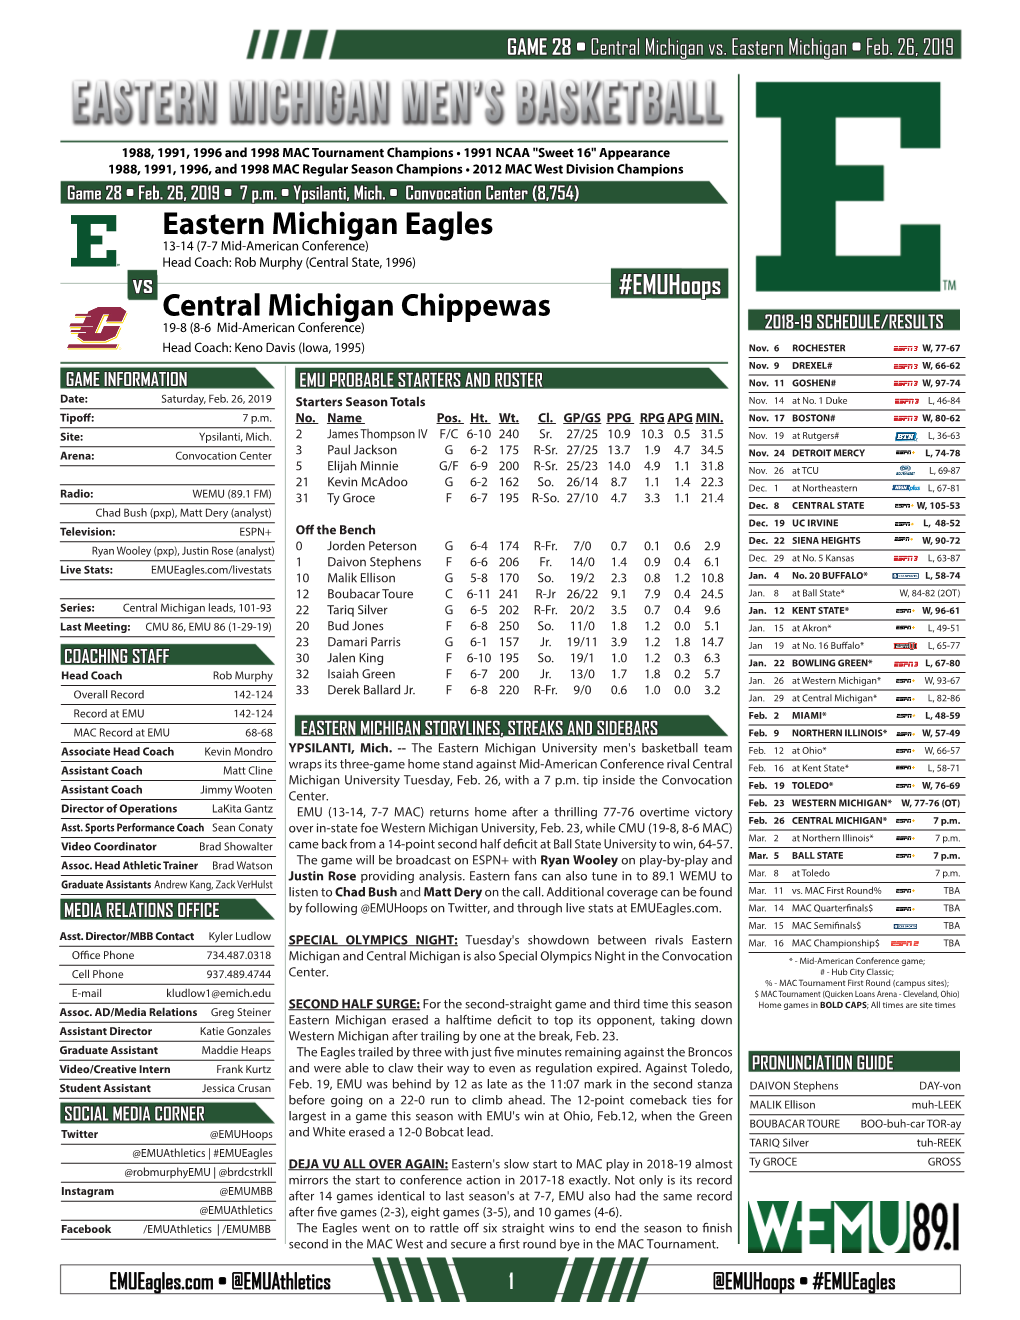 Eastern Michigan Eagles Central Michigan Chippewas